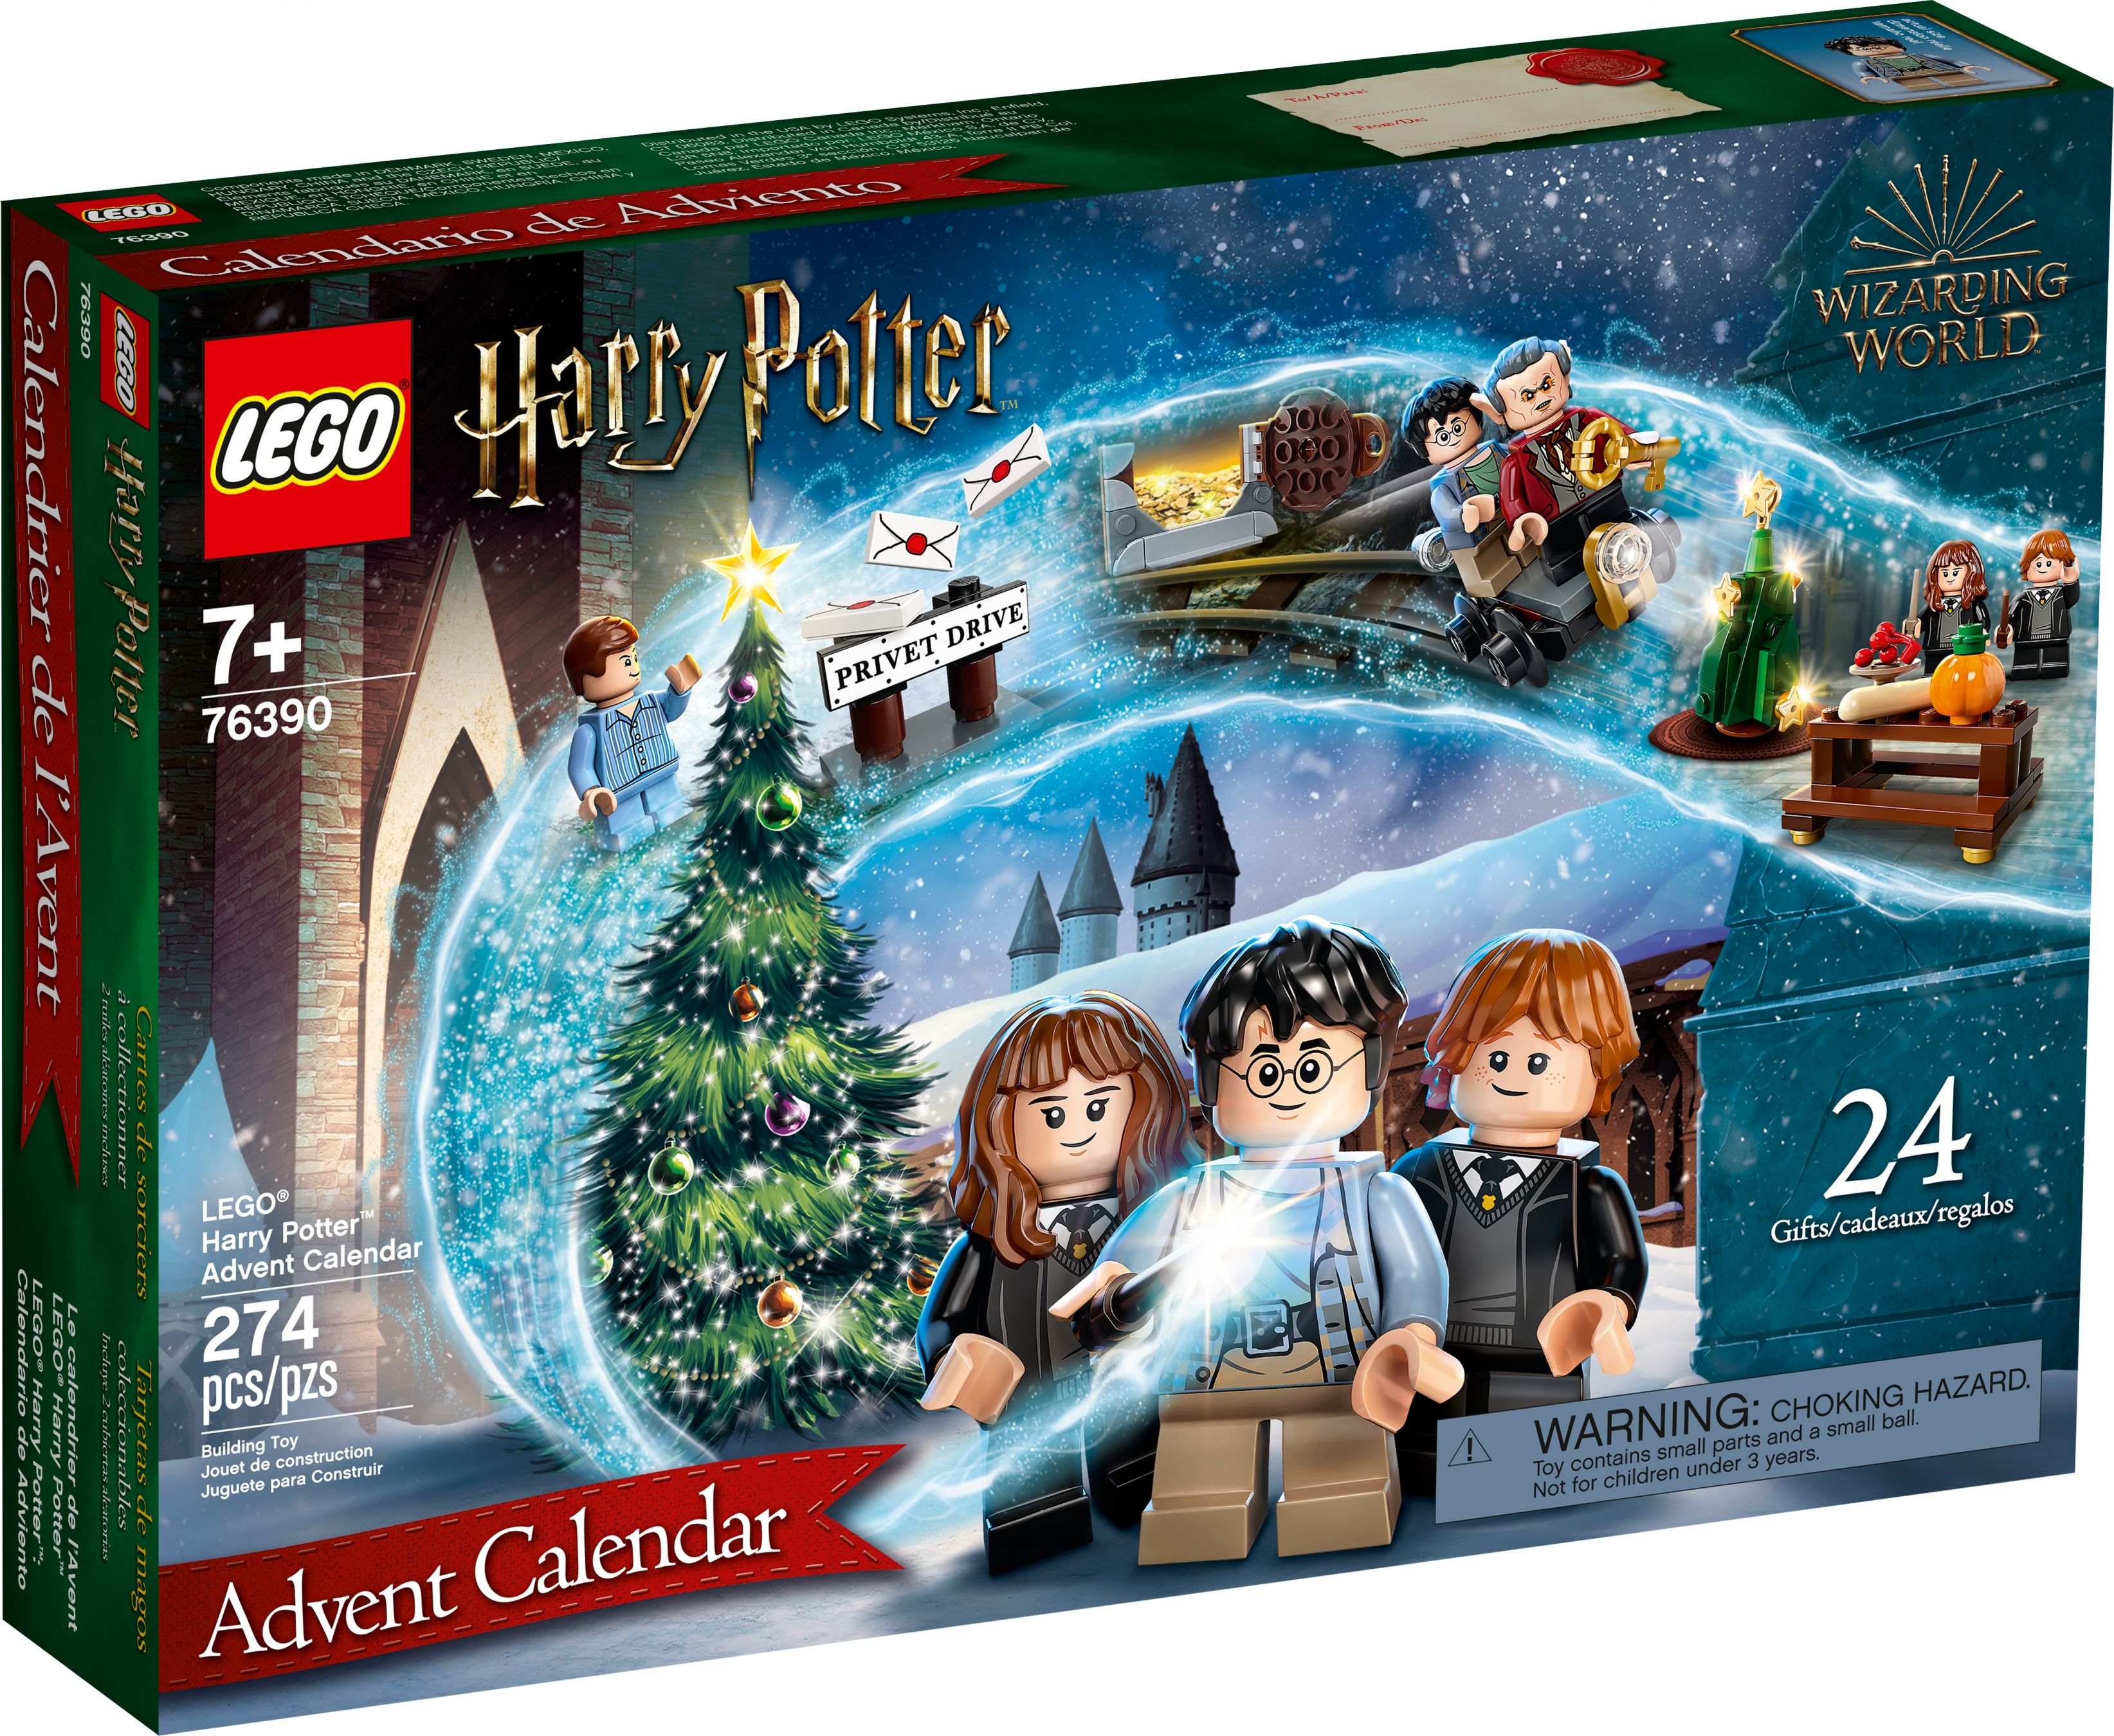 LEGO Harry Potter 76390 LEGO® Harry Potter™ Adventskalender LEGO_76390_alt1.jpg